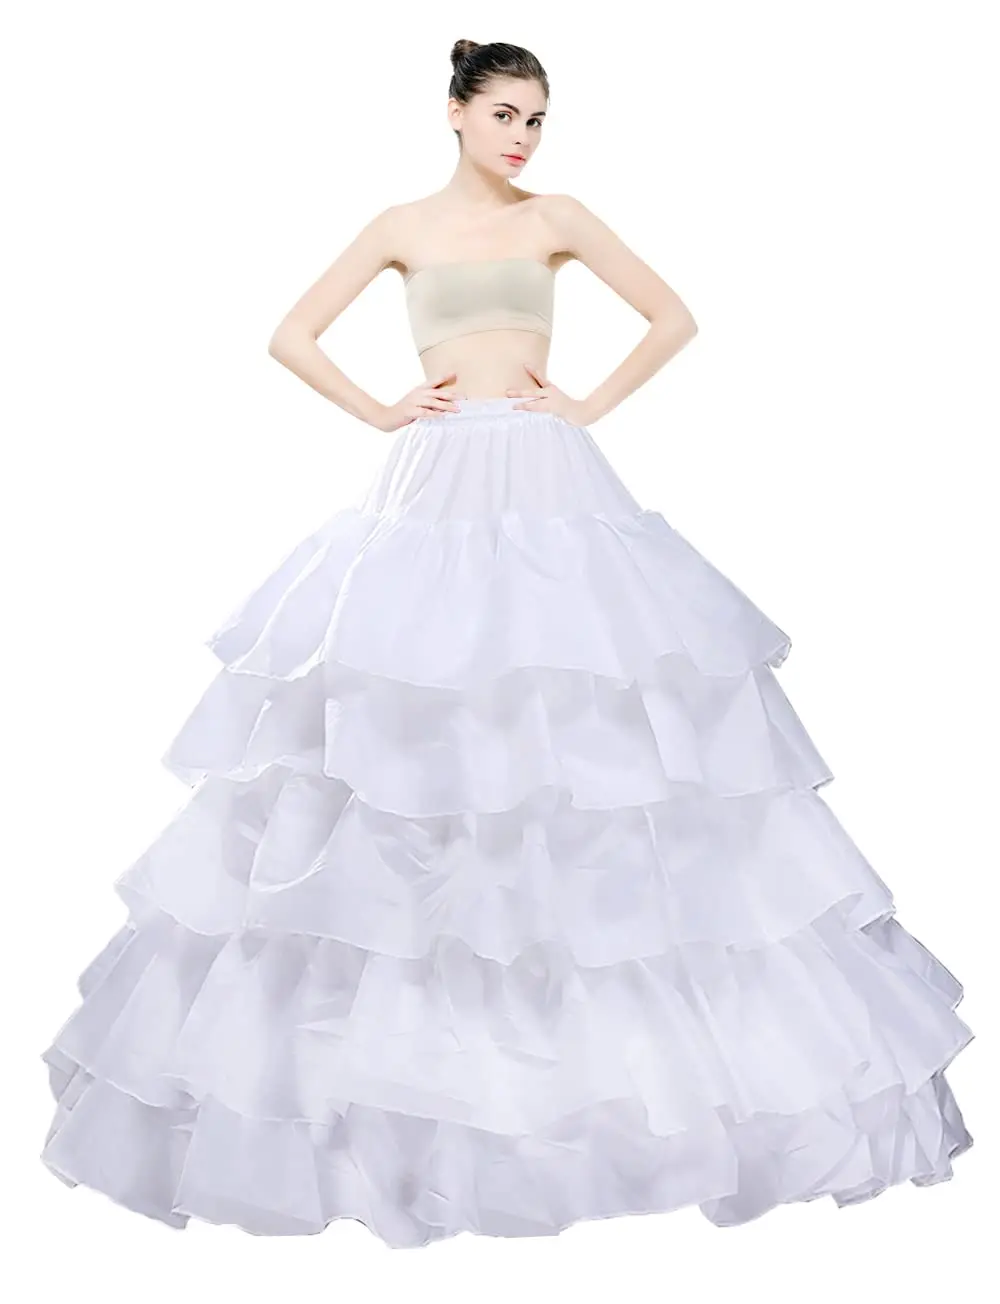 

Women's Crinoline Petticoat 4 Hoops Skirt 5 Ruffles Layers Ball Gown Half Slips Underskirt for Wedding Bridal Dress